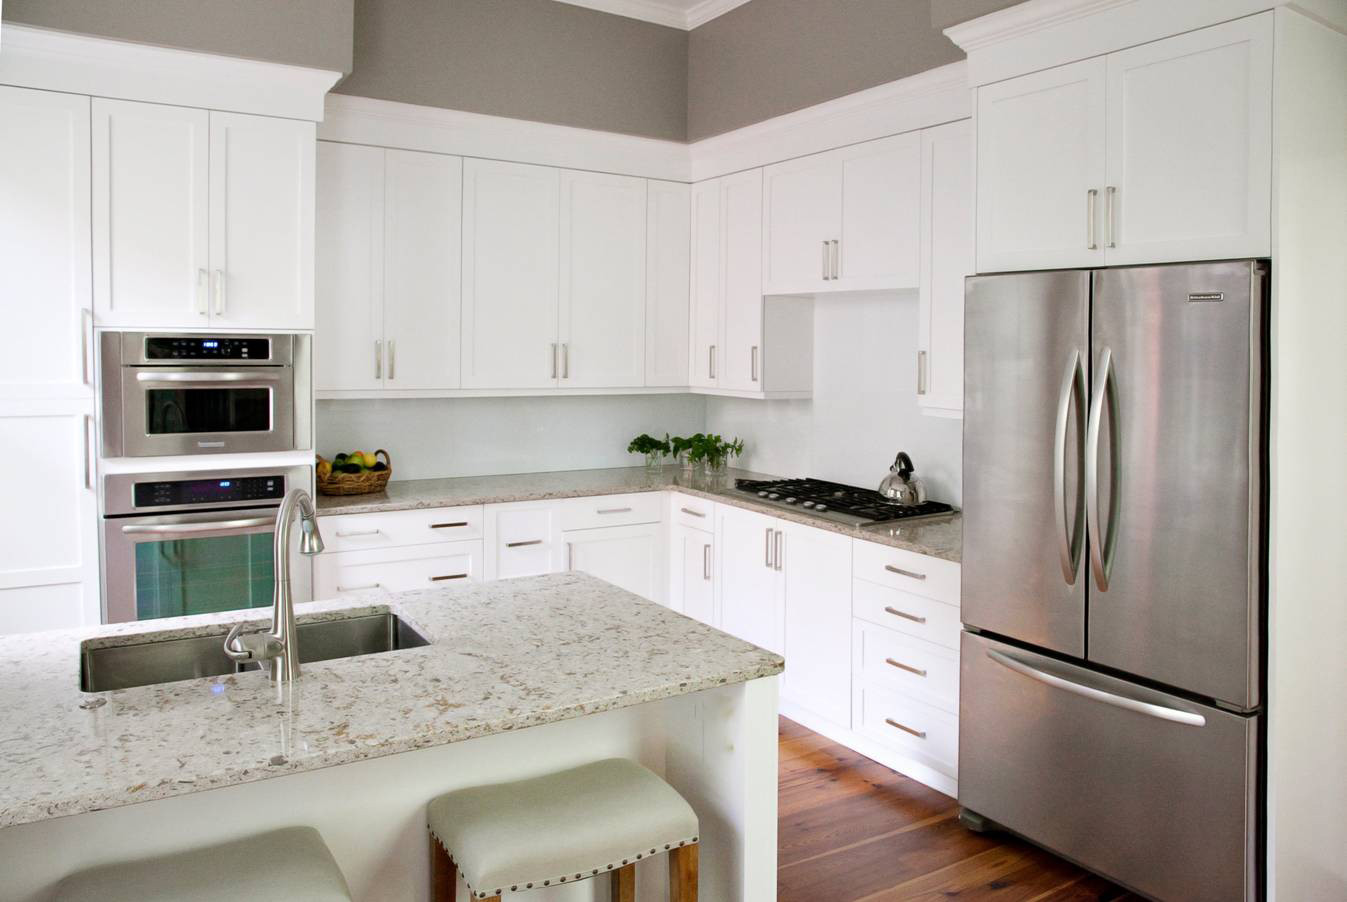 Kitchen Cabinet White Paint Colors
 Most Popular Kitchen Cabinet Colors in 2019